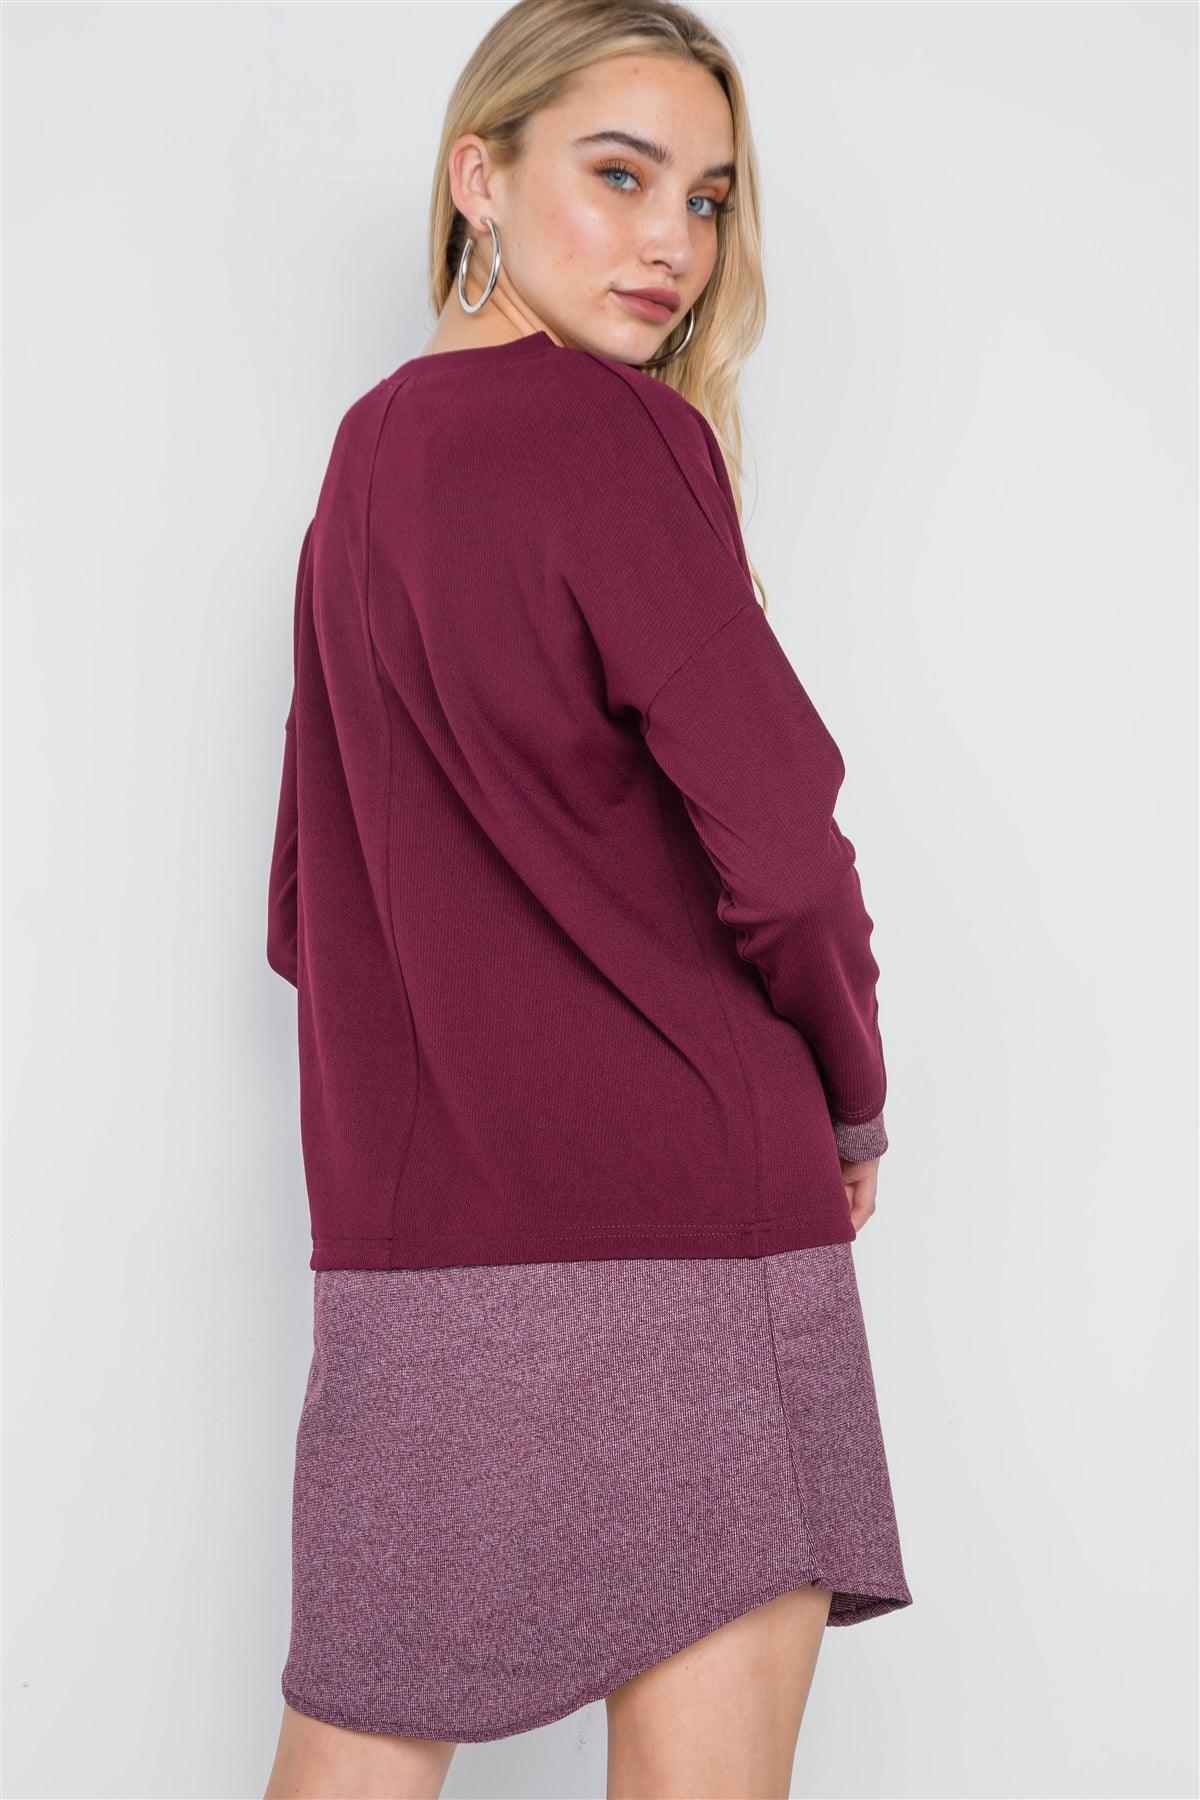 Wine Knit Combo Long Sleeve Sweater Dress /2-2